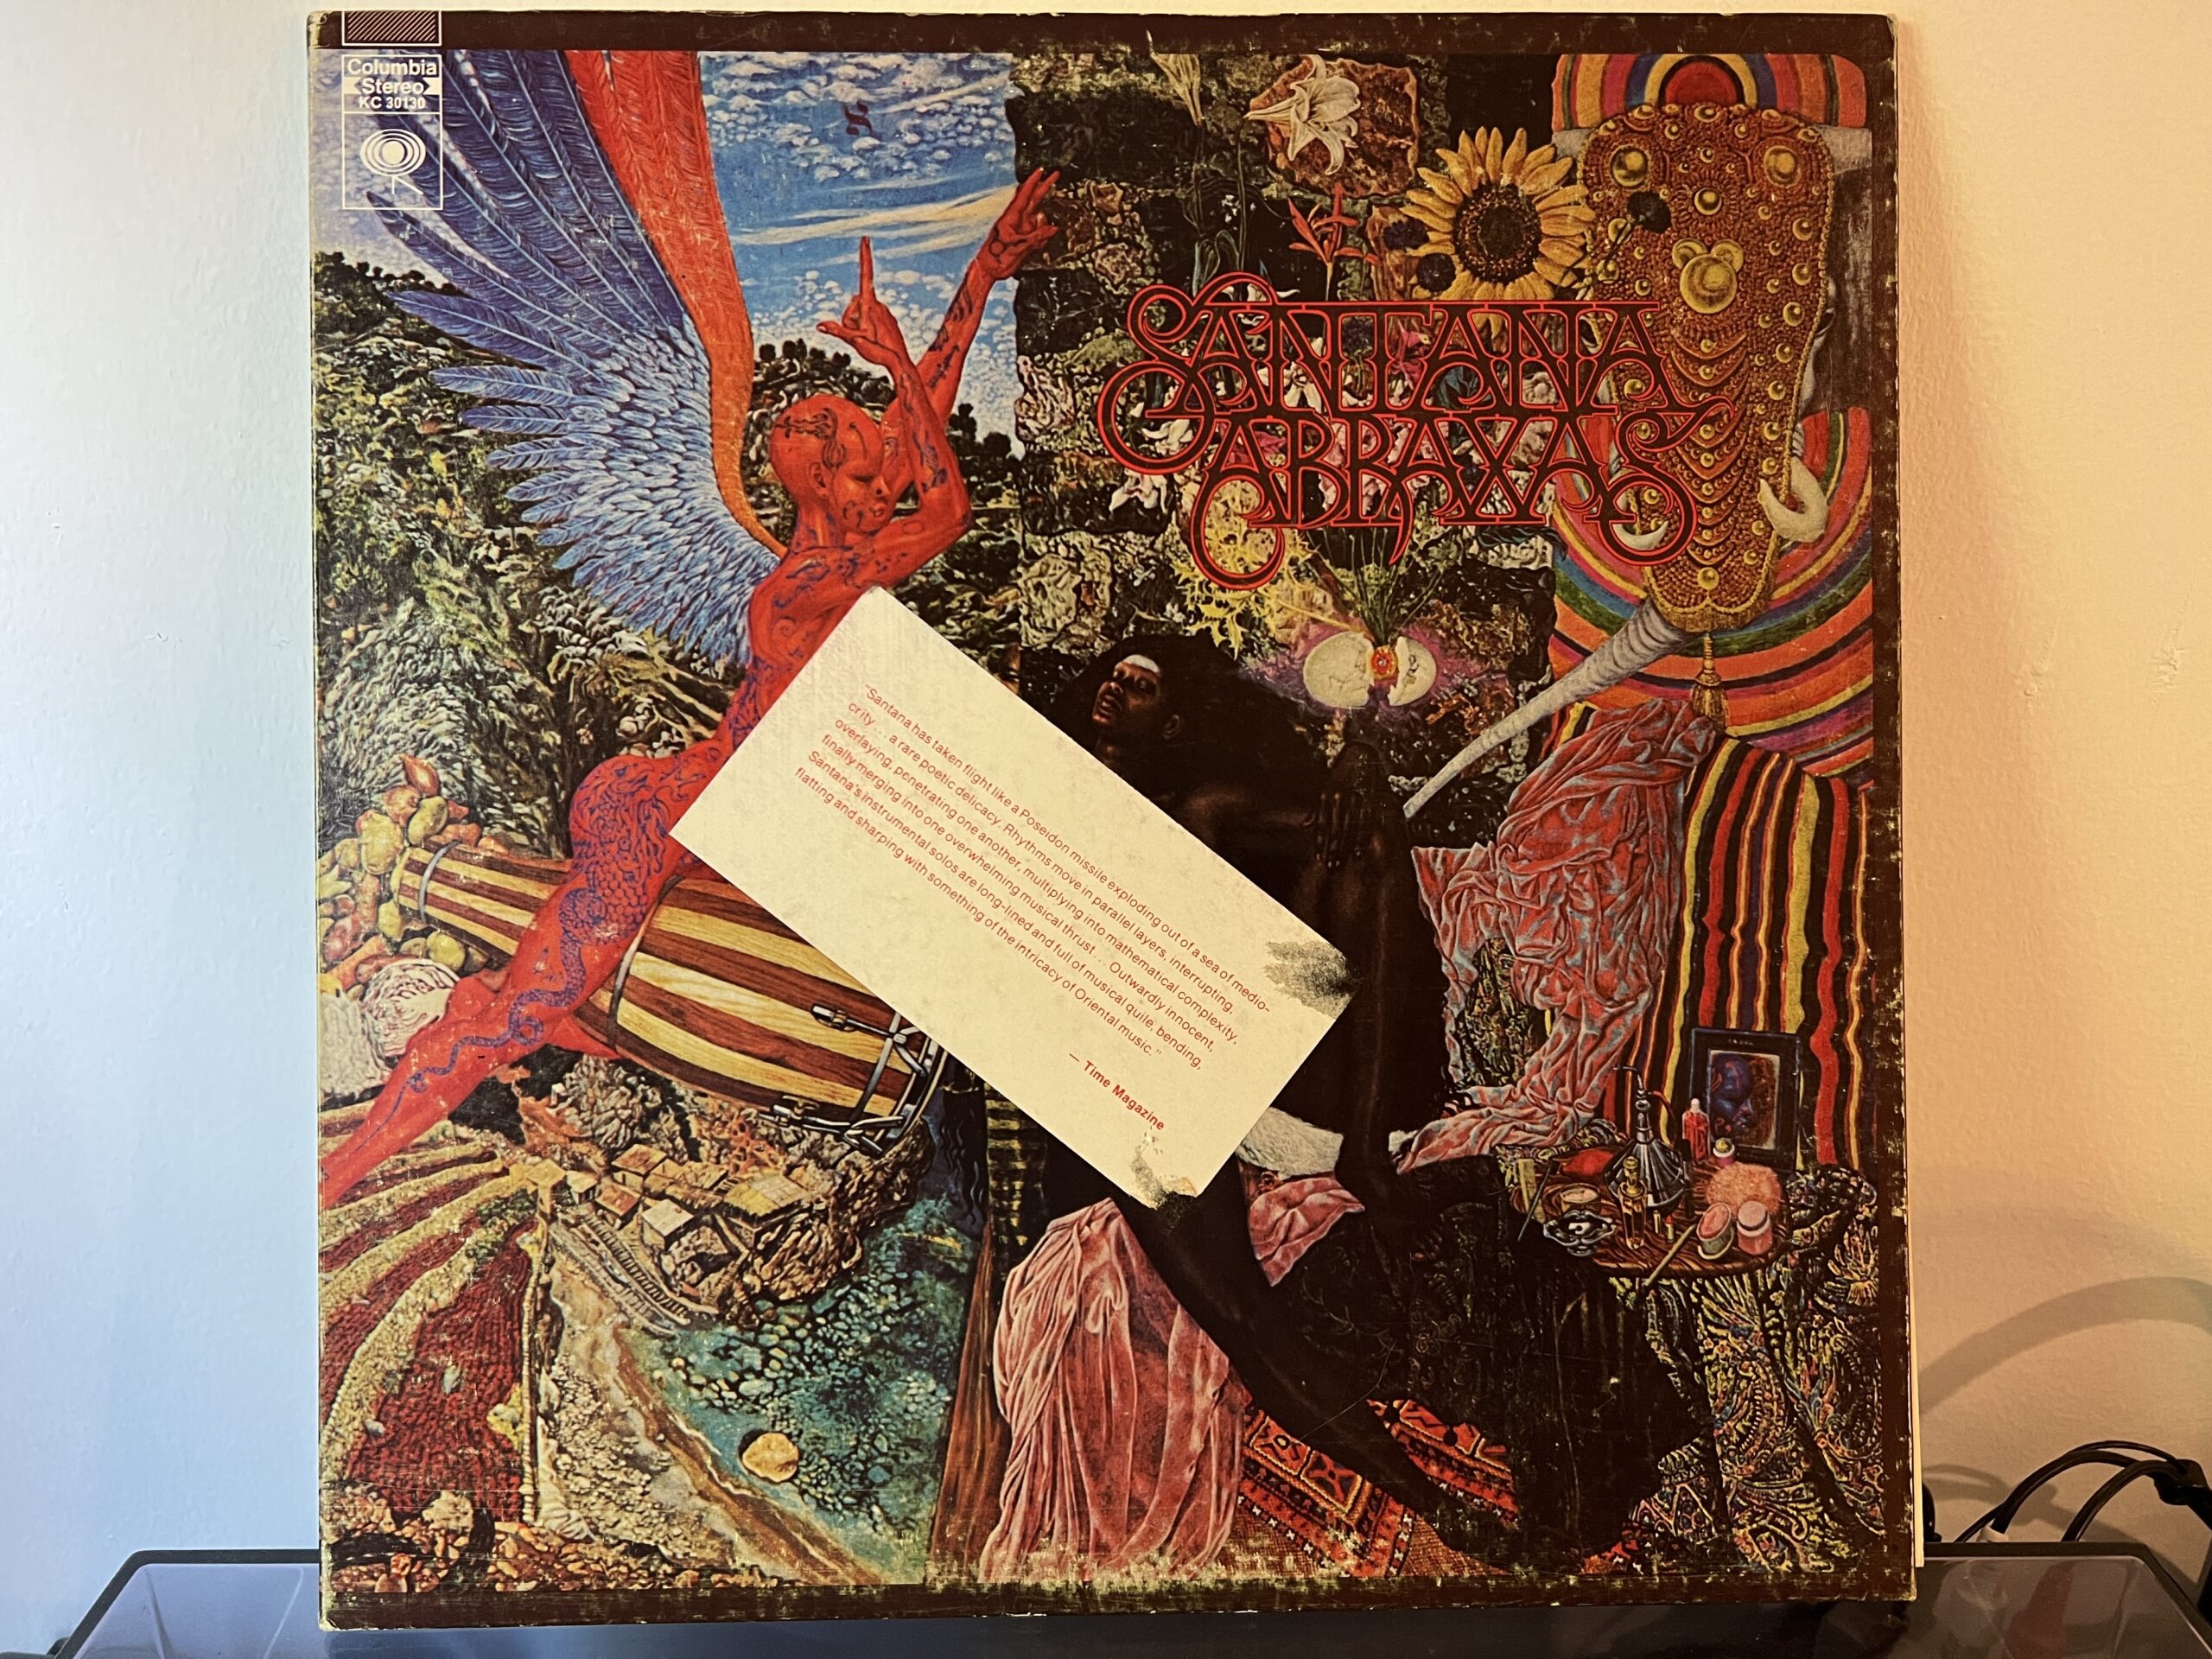 Abraxas by Santana (Vinyl record album review)